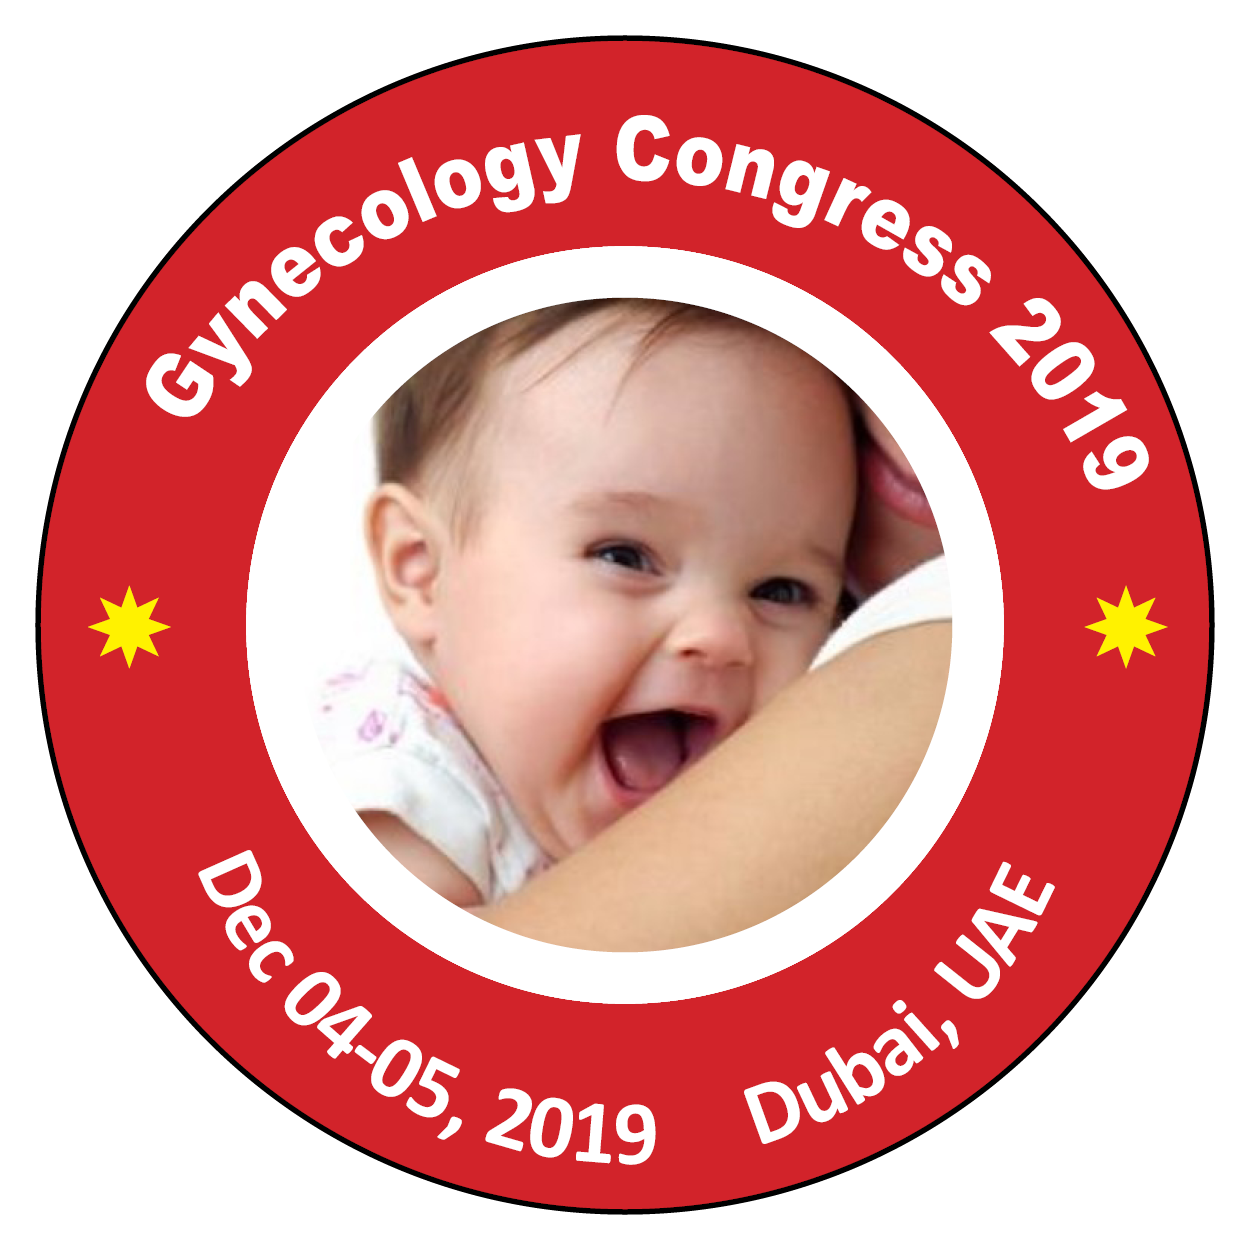 Annual Congress on Gynecology and Women’s Healthcare, Dubai, United Arab Emirates